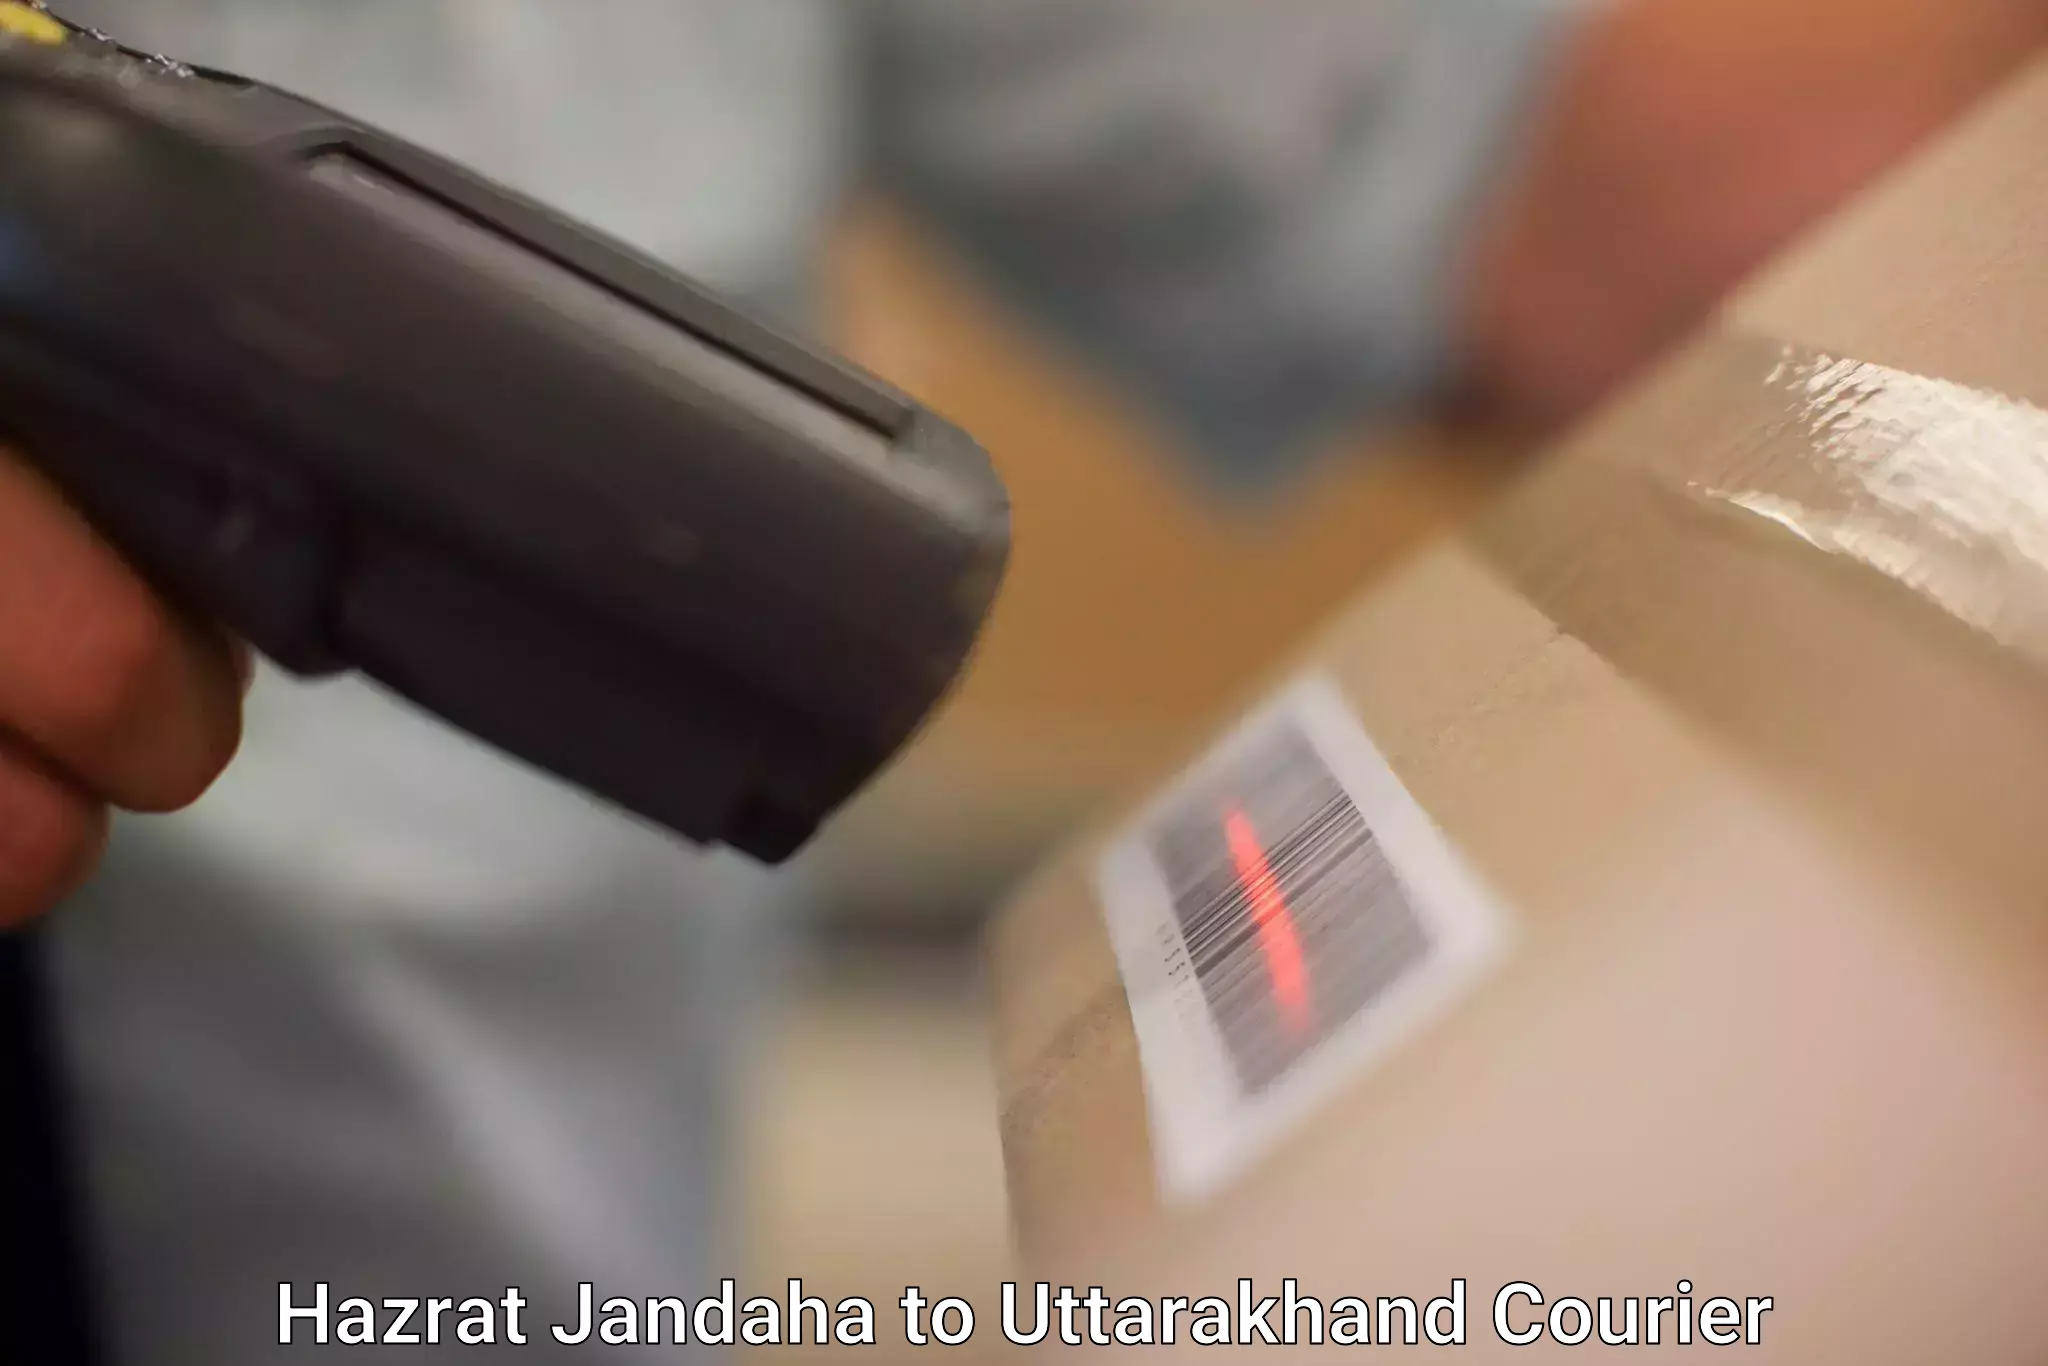 Enhanced tracking features in Hazrat Jandaha to Kashipur